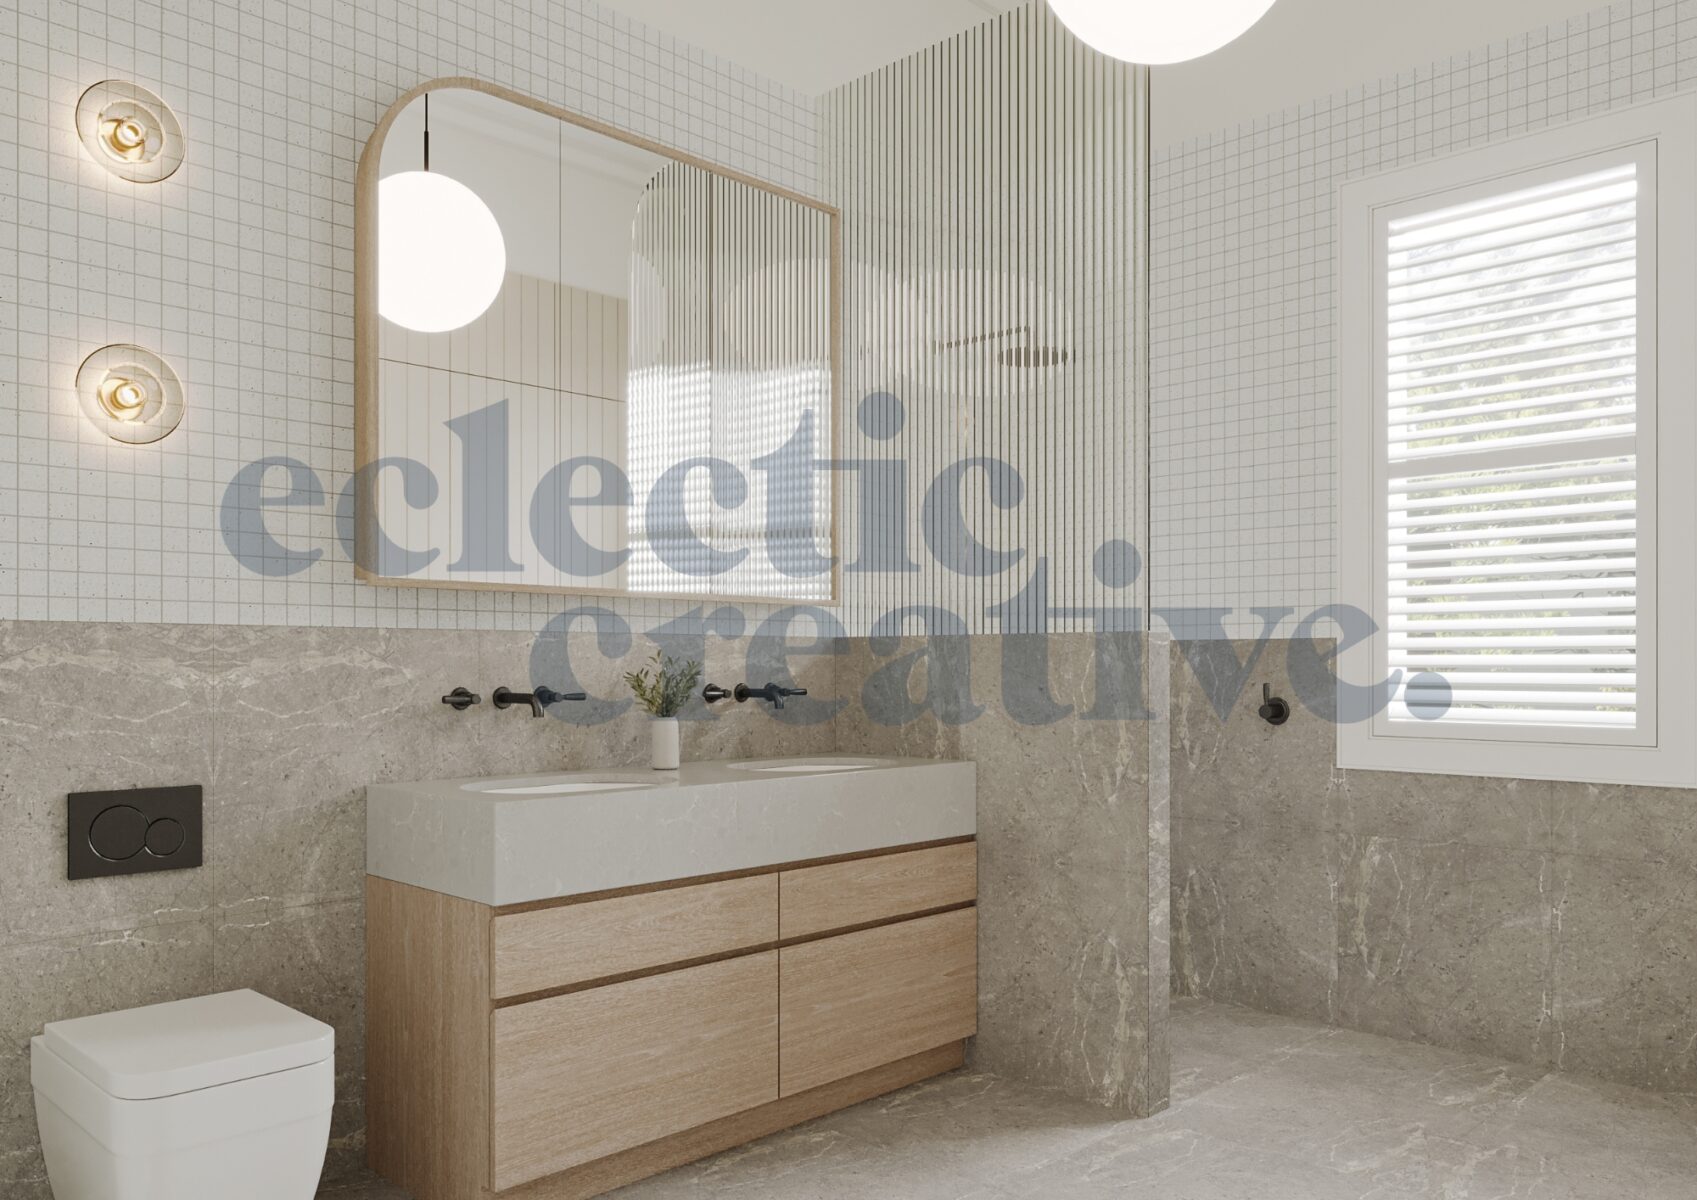 albert-park-bathroom-design-render